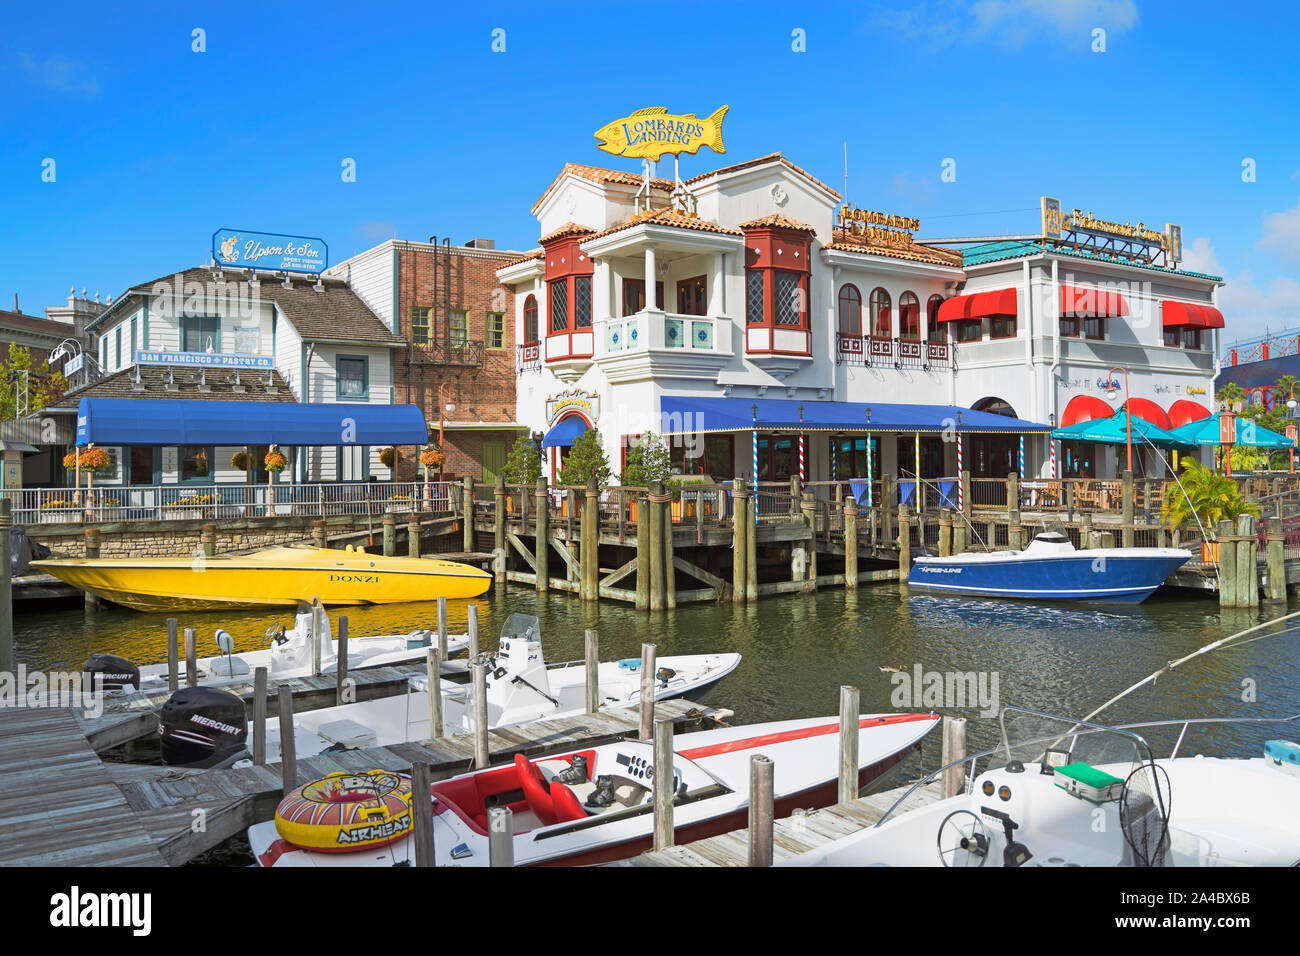 Von Lombard Landung von Lombard Seafood Grill, Fisherman's Cove, Restaurants, Speisen in den Universal Studios Resort, Orlando, Florida, USA Stockfoto